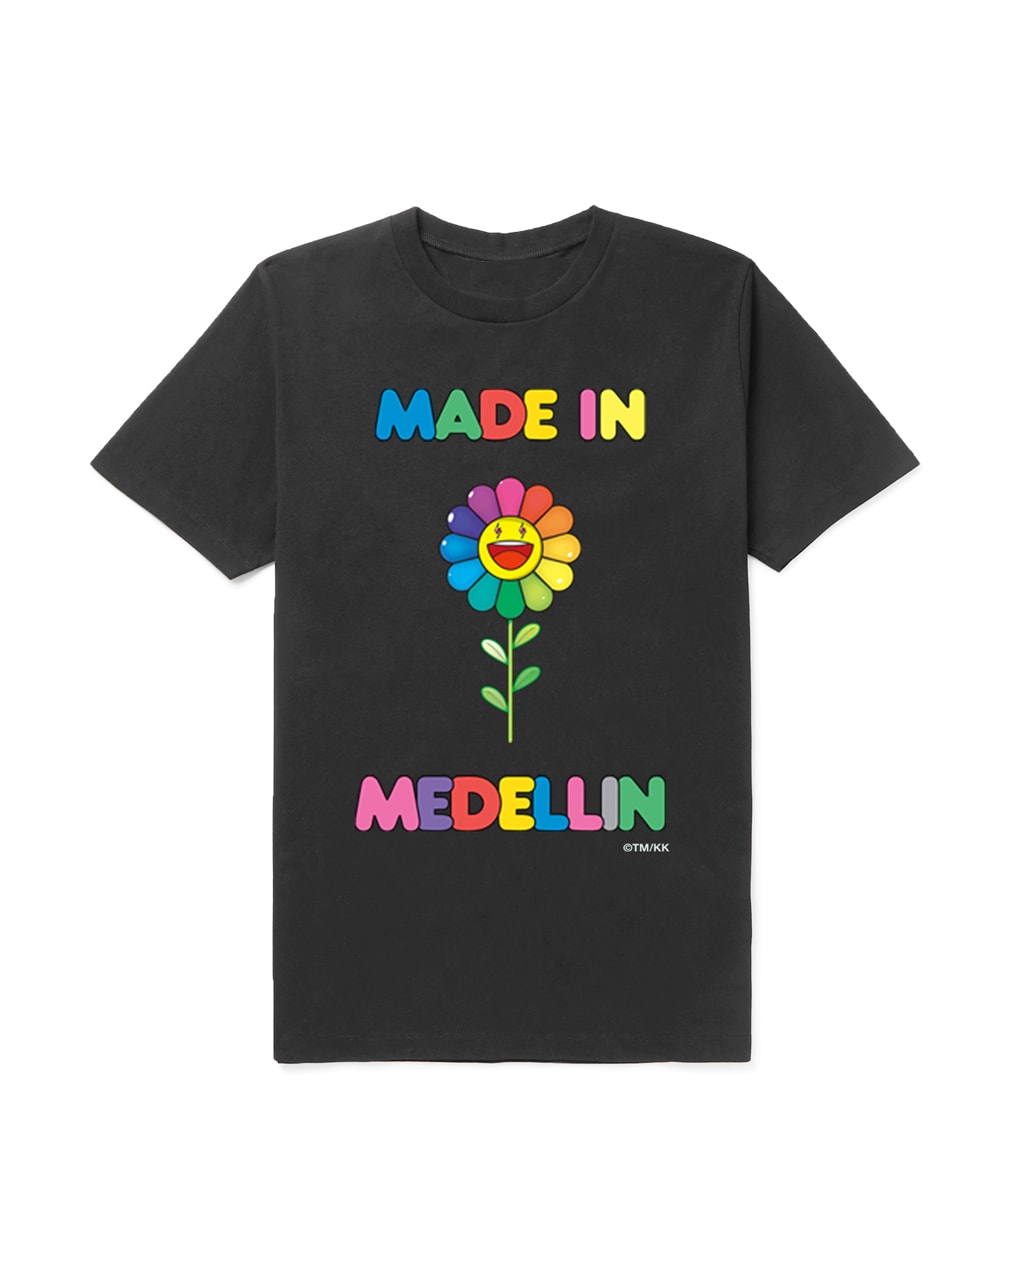 J Balvin x Takashi Murakami 'Colores' Merch Final Drop collection tshirt  black Medellin